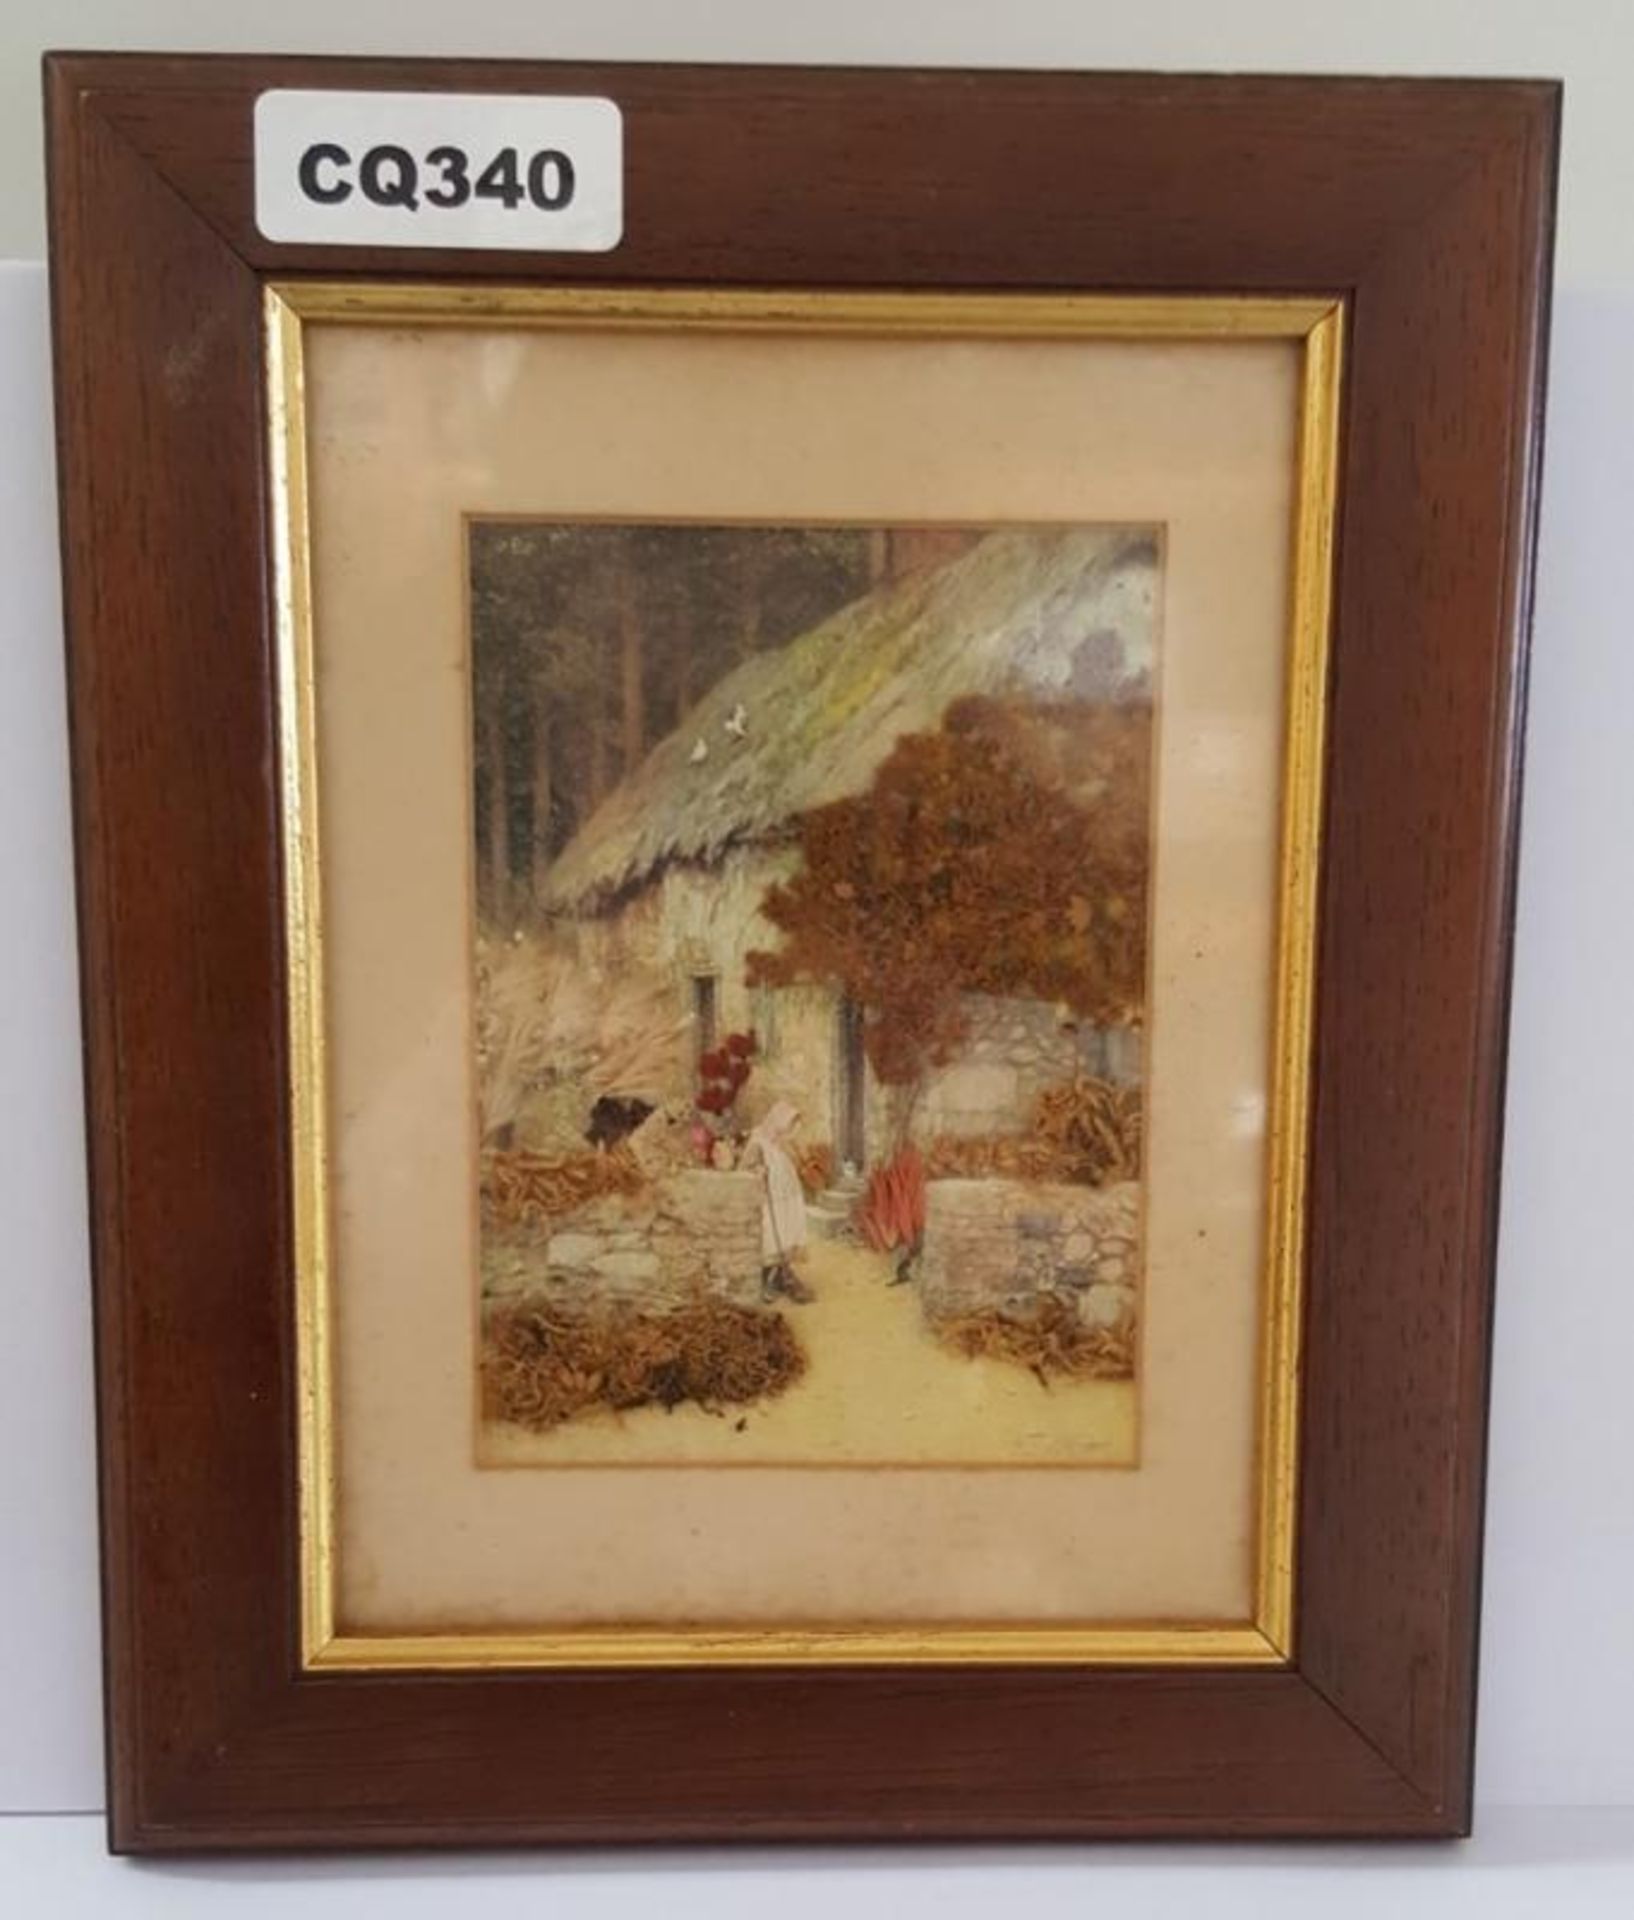 1 x Framed Artwork Entitled 'At A Cottage Door' - Dimensions: H25/L20cm - Ref CQ340 E - CL334 - Loca